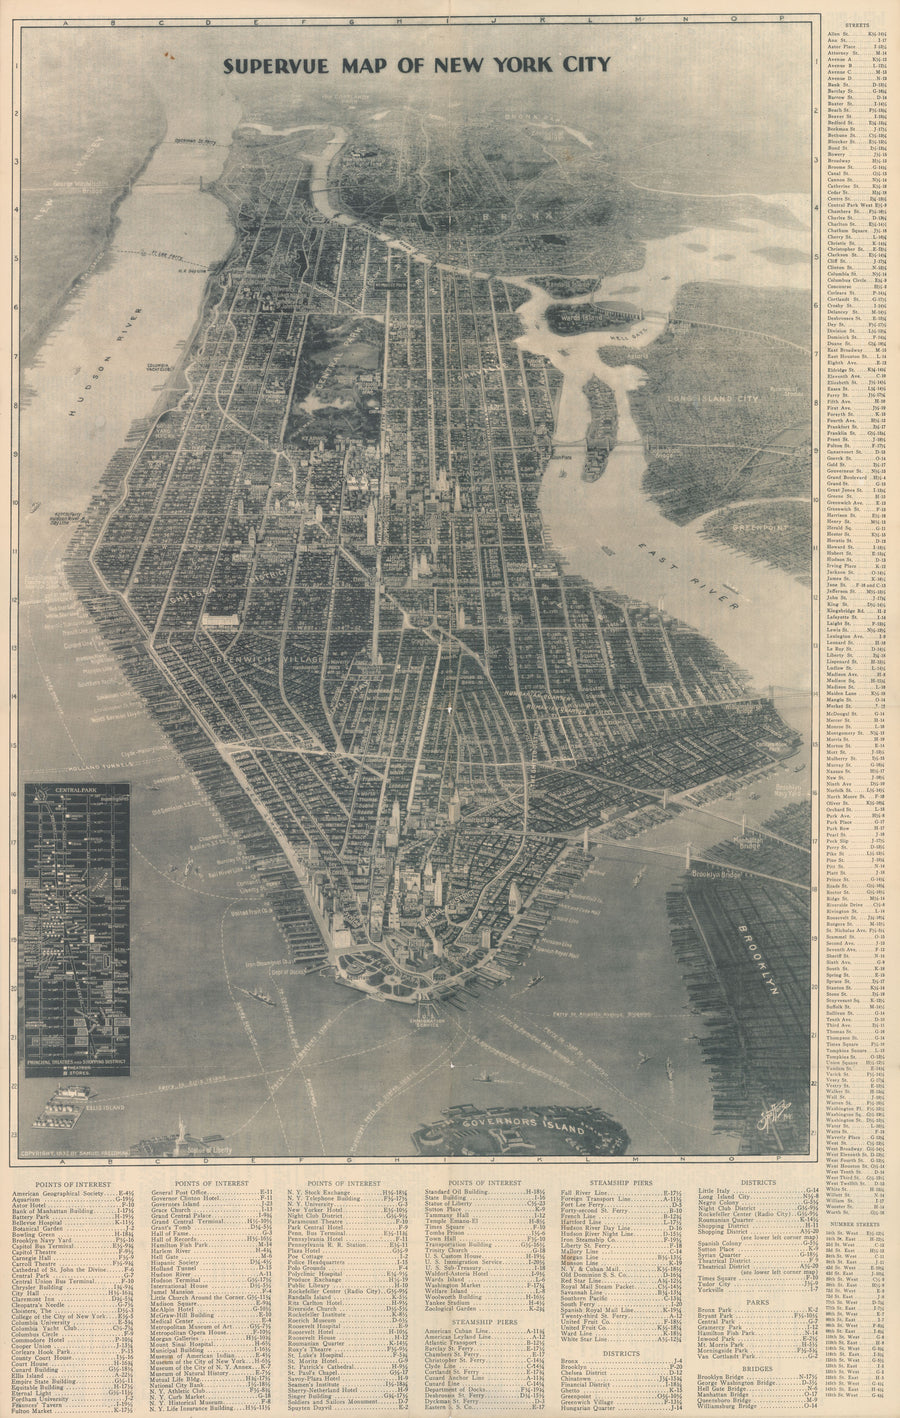 1932 Supervue Map of New York City